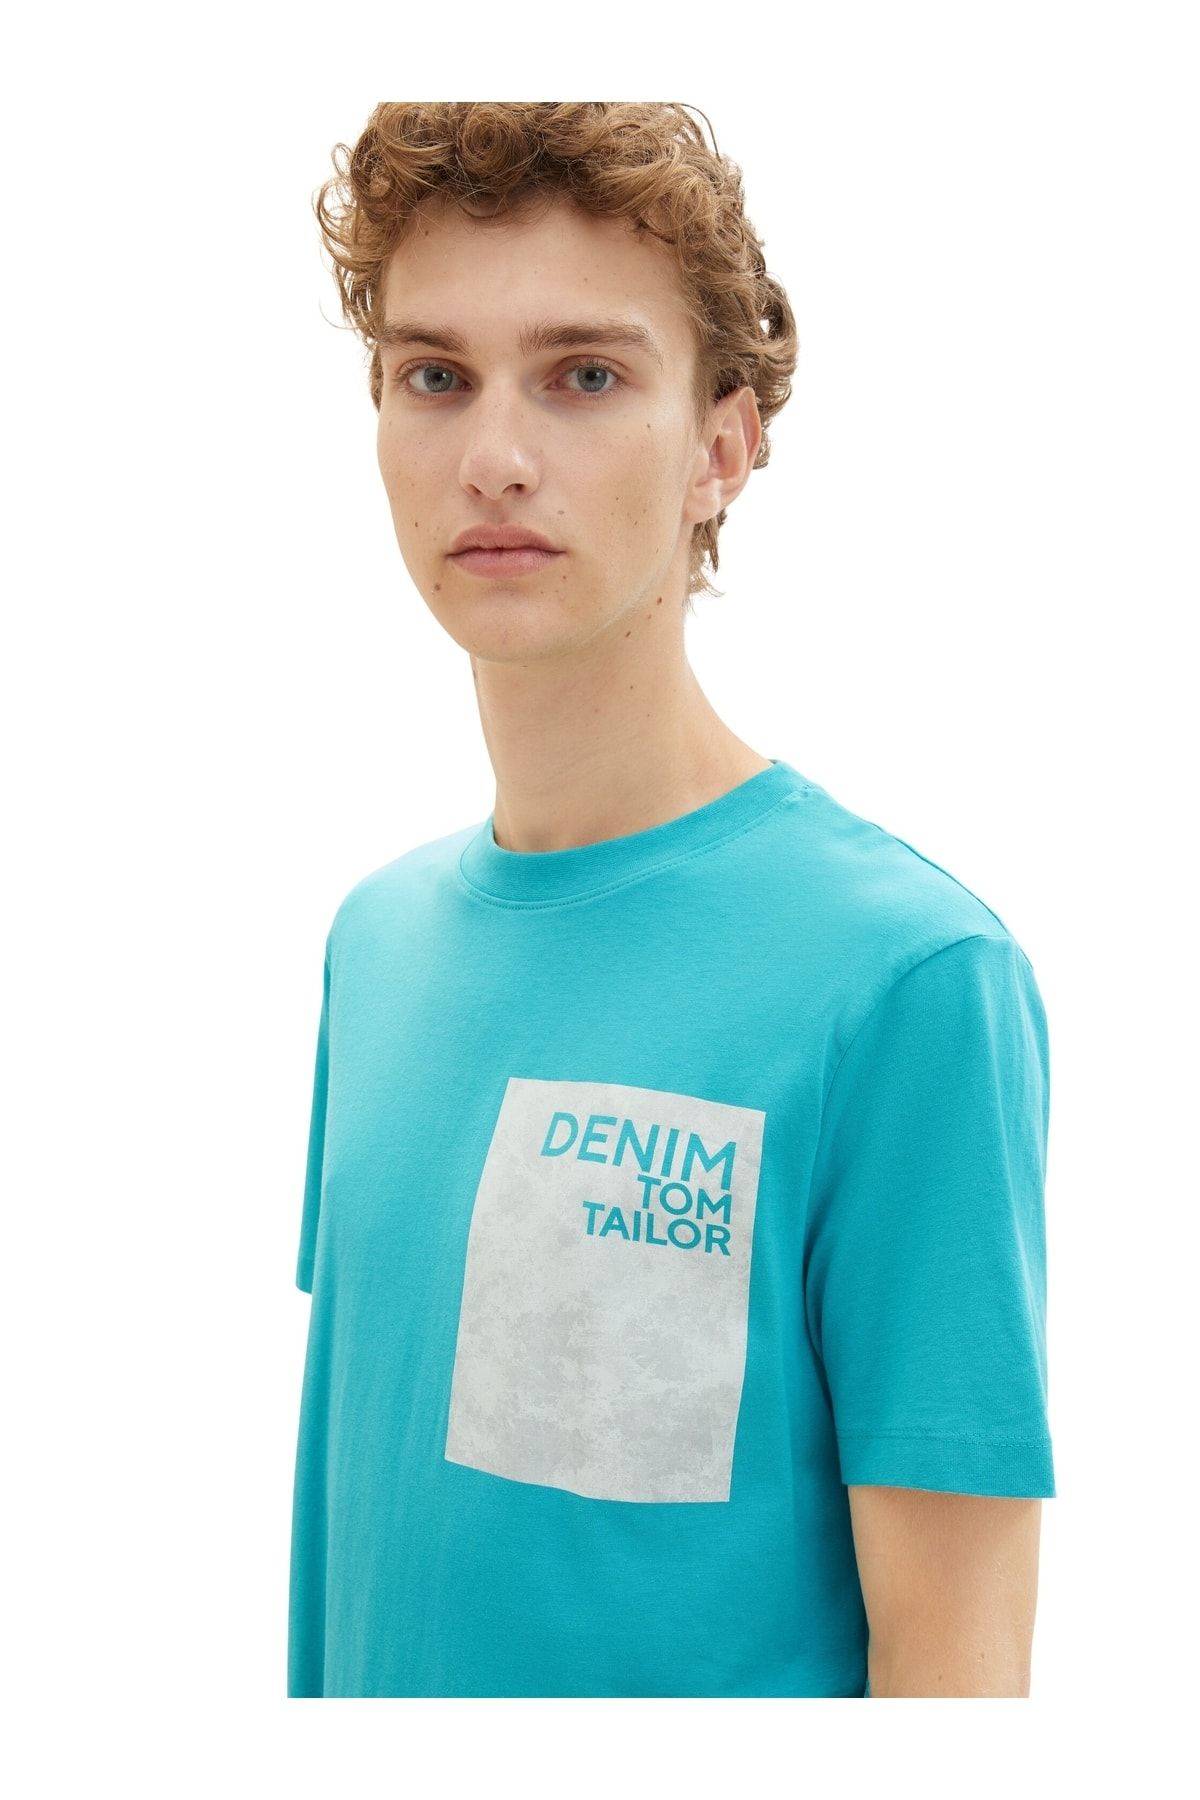 Tom Tailor Denim T-Shirt - Blue - Regular fit - Trendyol